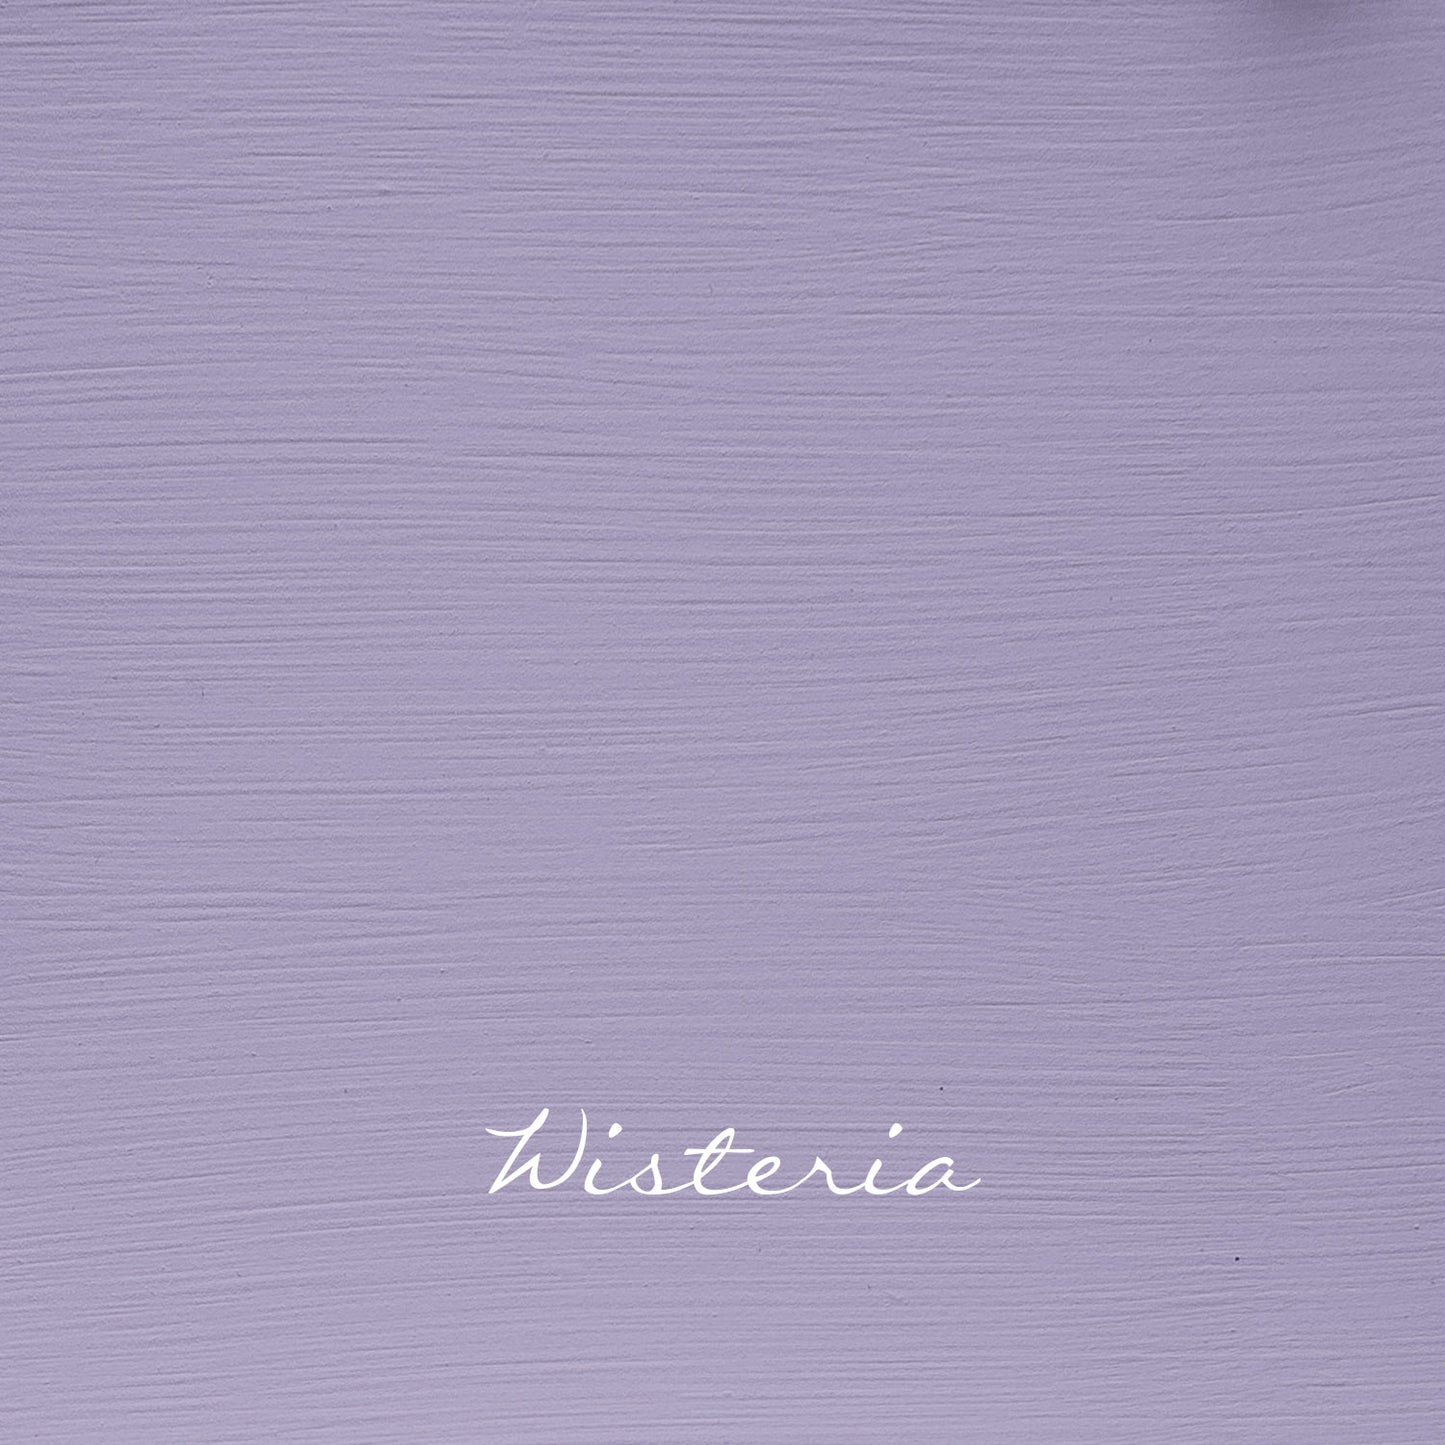 Wisteria - Vintage